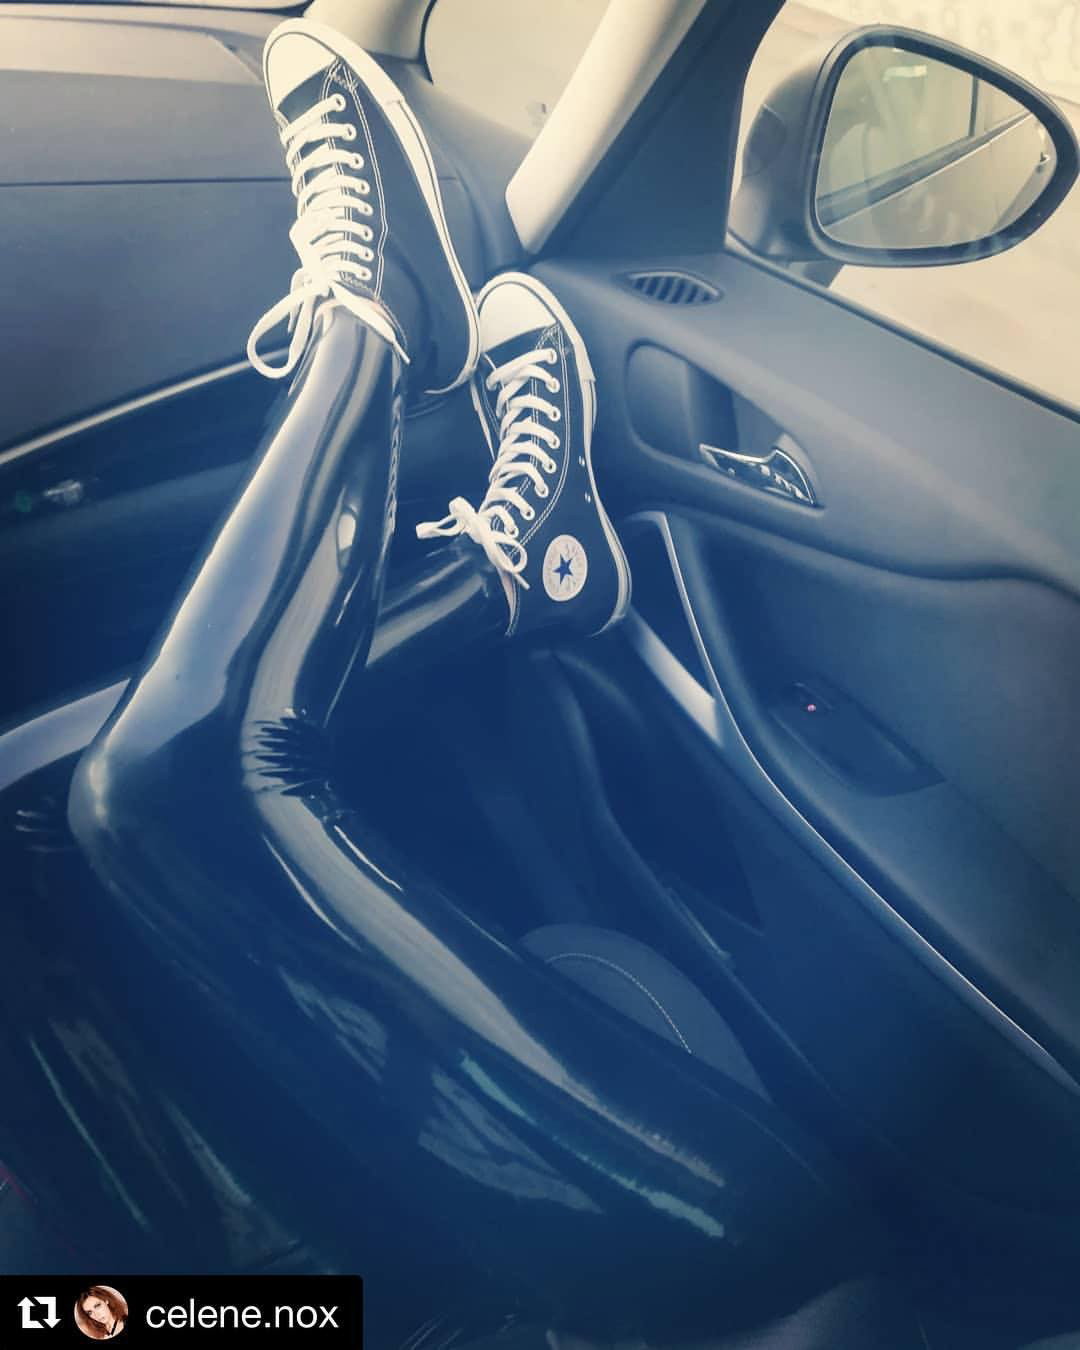 Watch the Photo by JoonasD6 with the username @JoonasD6, posted on October 27, 2018 and the text says 'latexfashiontv:

#Repost @celene.nox
・・・
Got new Converse  classy one  -
-
#chucks #latexleggings #converse #latex #leggings #latexhosen #legginslove #noSocks #rubber #shiny #dailylatex #fetishlife #fetishlifestyle #legslove #legs #reflection #rubbertime..'